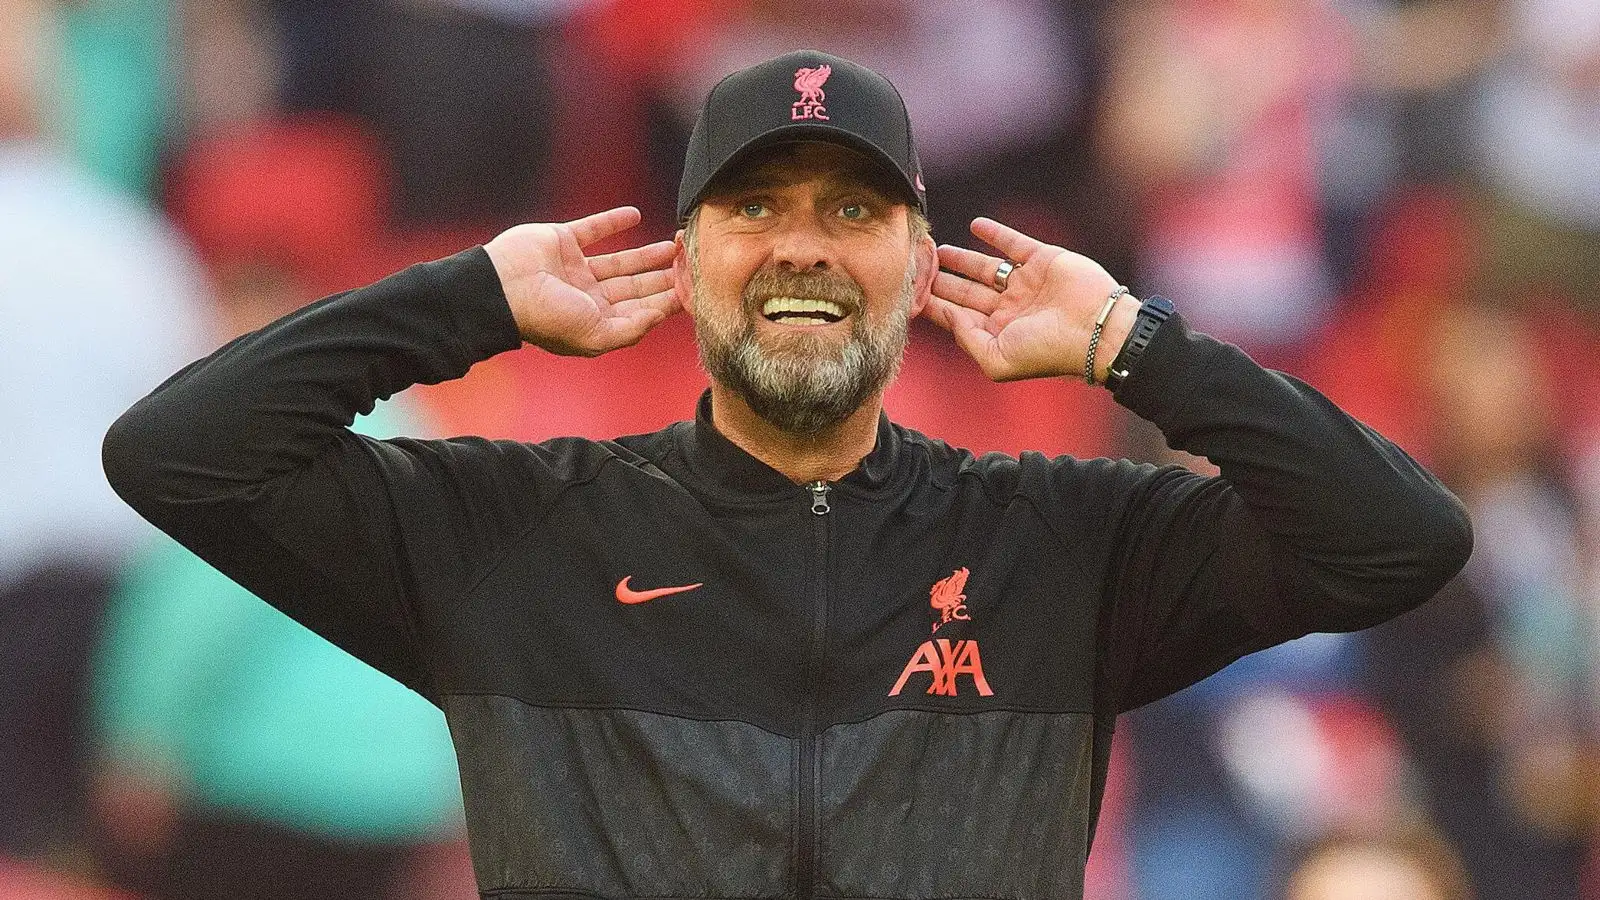 Liverpool manager Jurgen Klopp celebrates